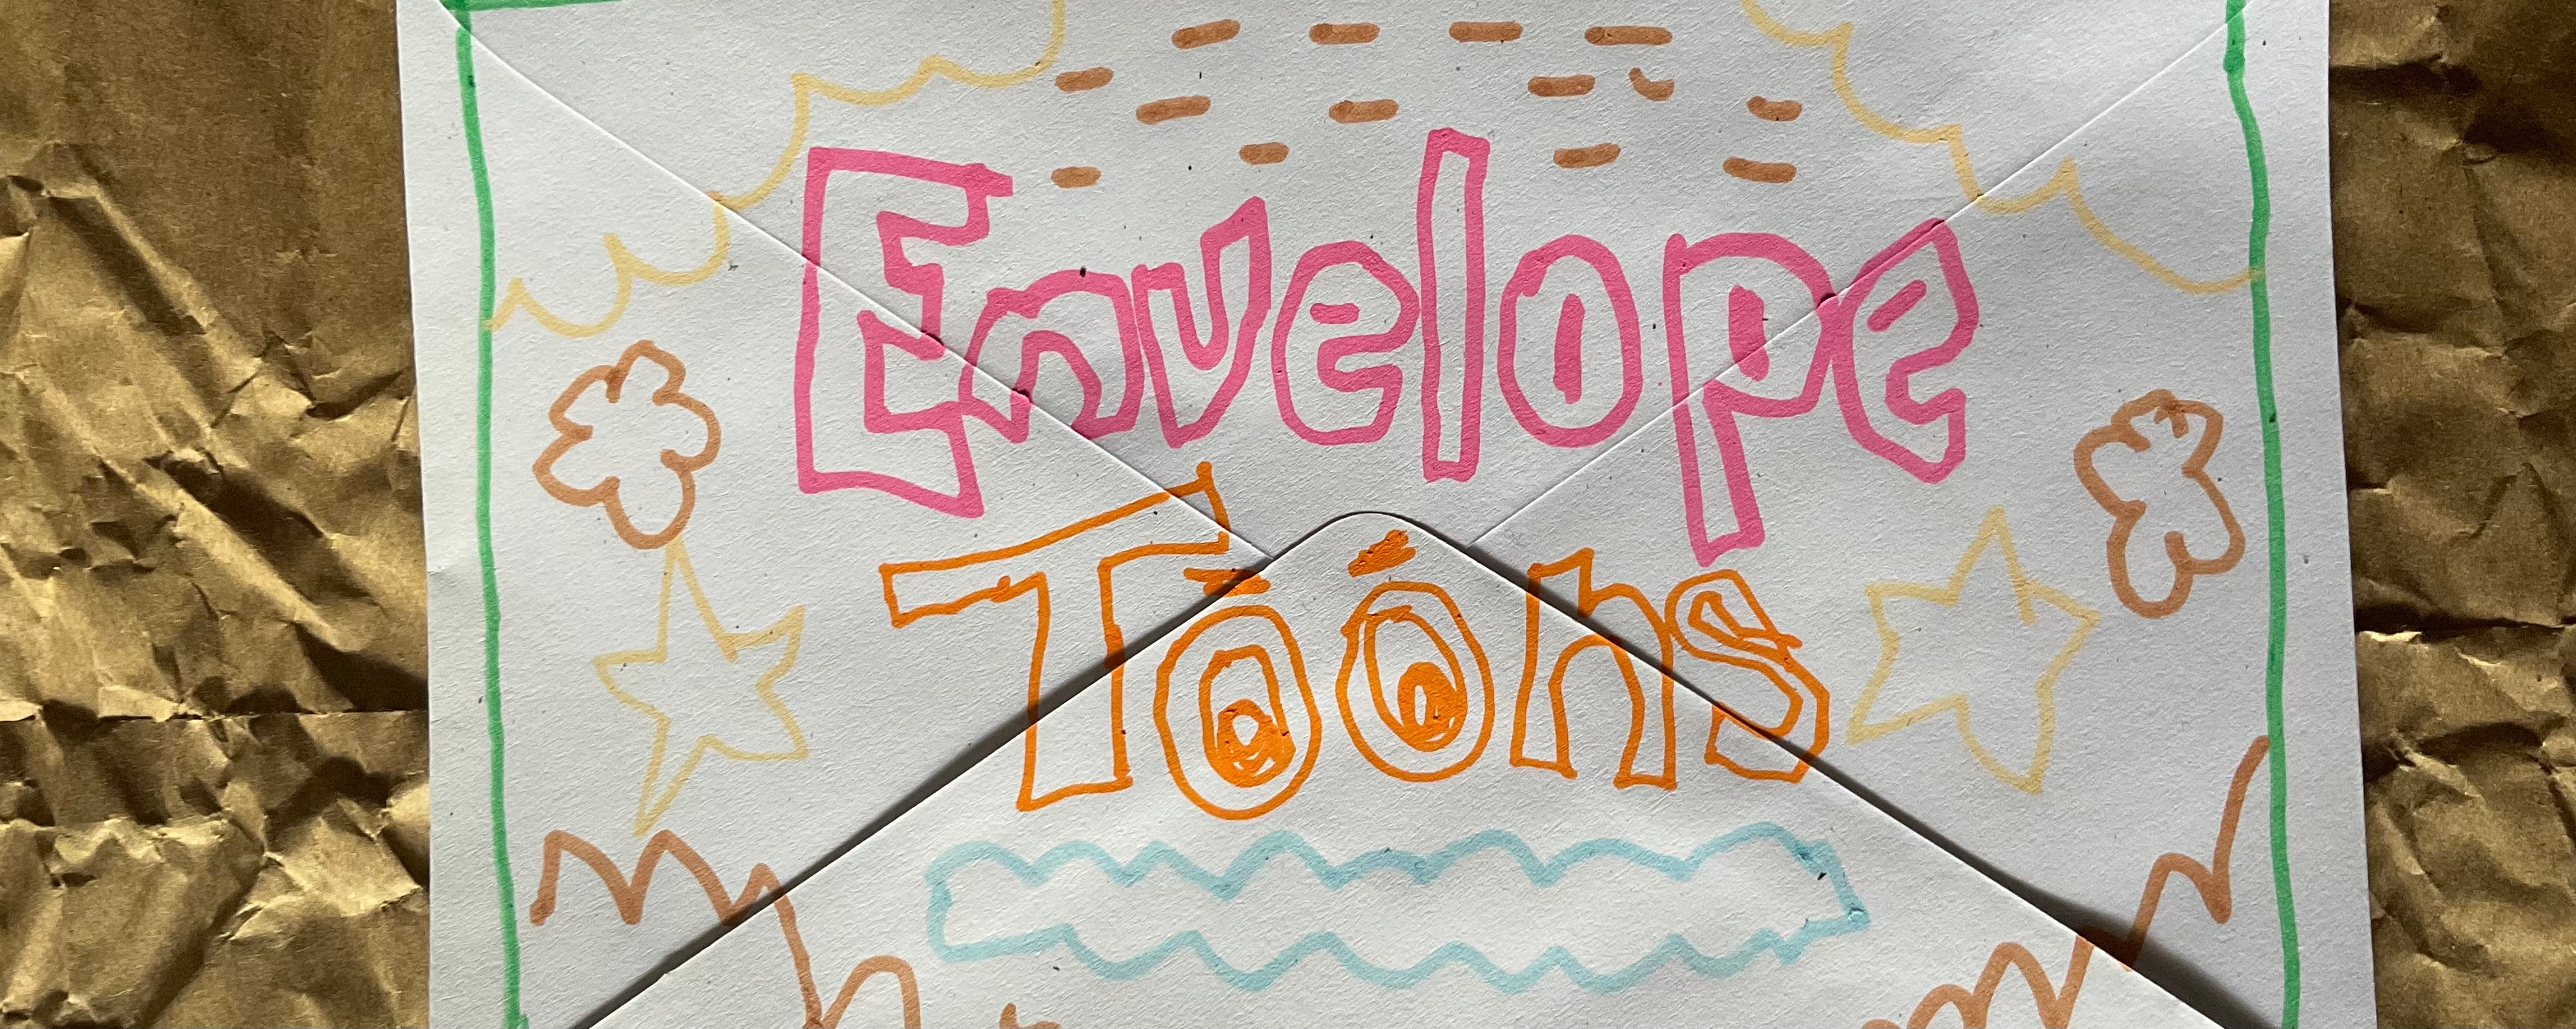 envelope Toons banner